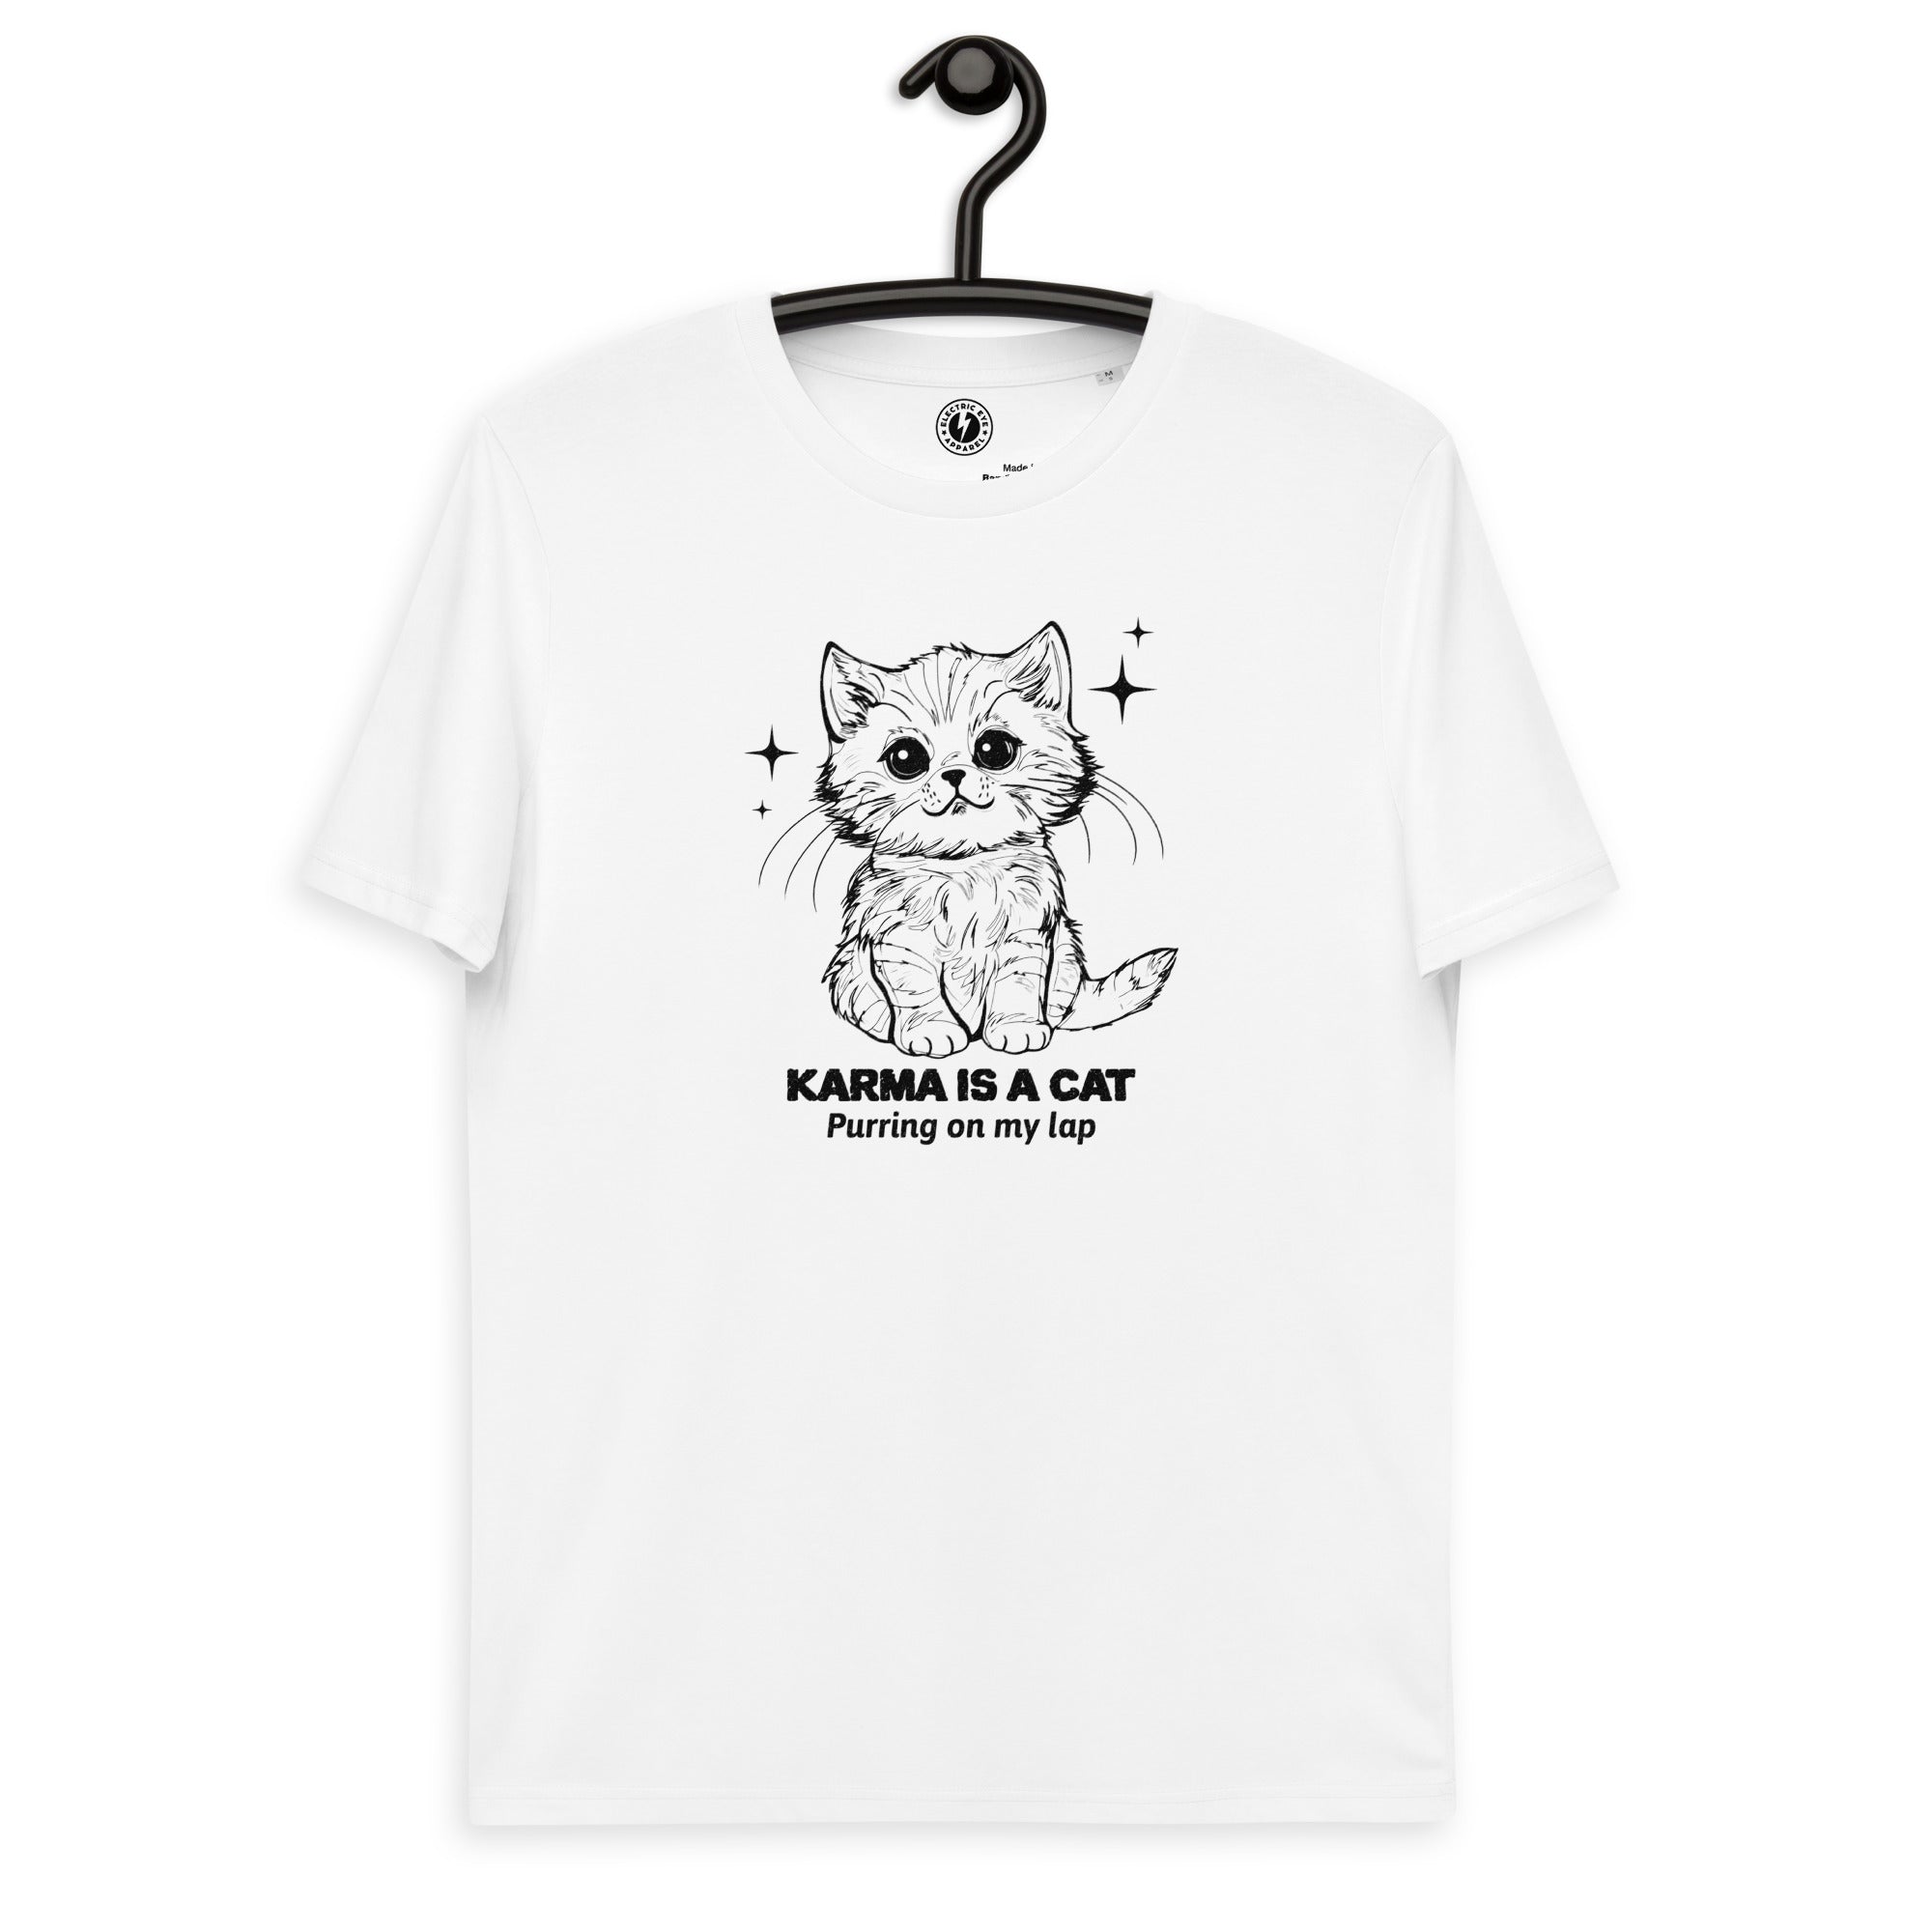 Karma Is A Cat Vintage Printed Illustration - Unisex organic cotton t-shirt (black print)